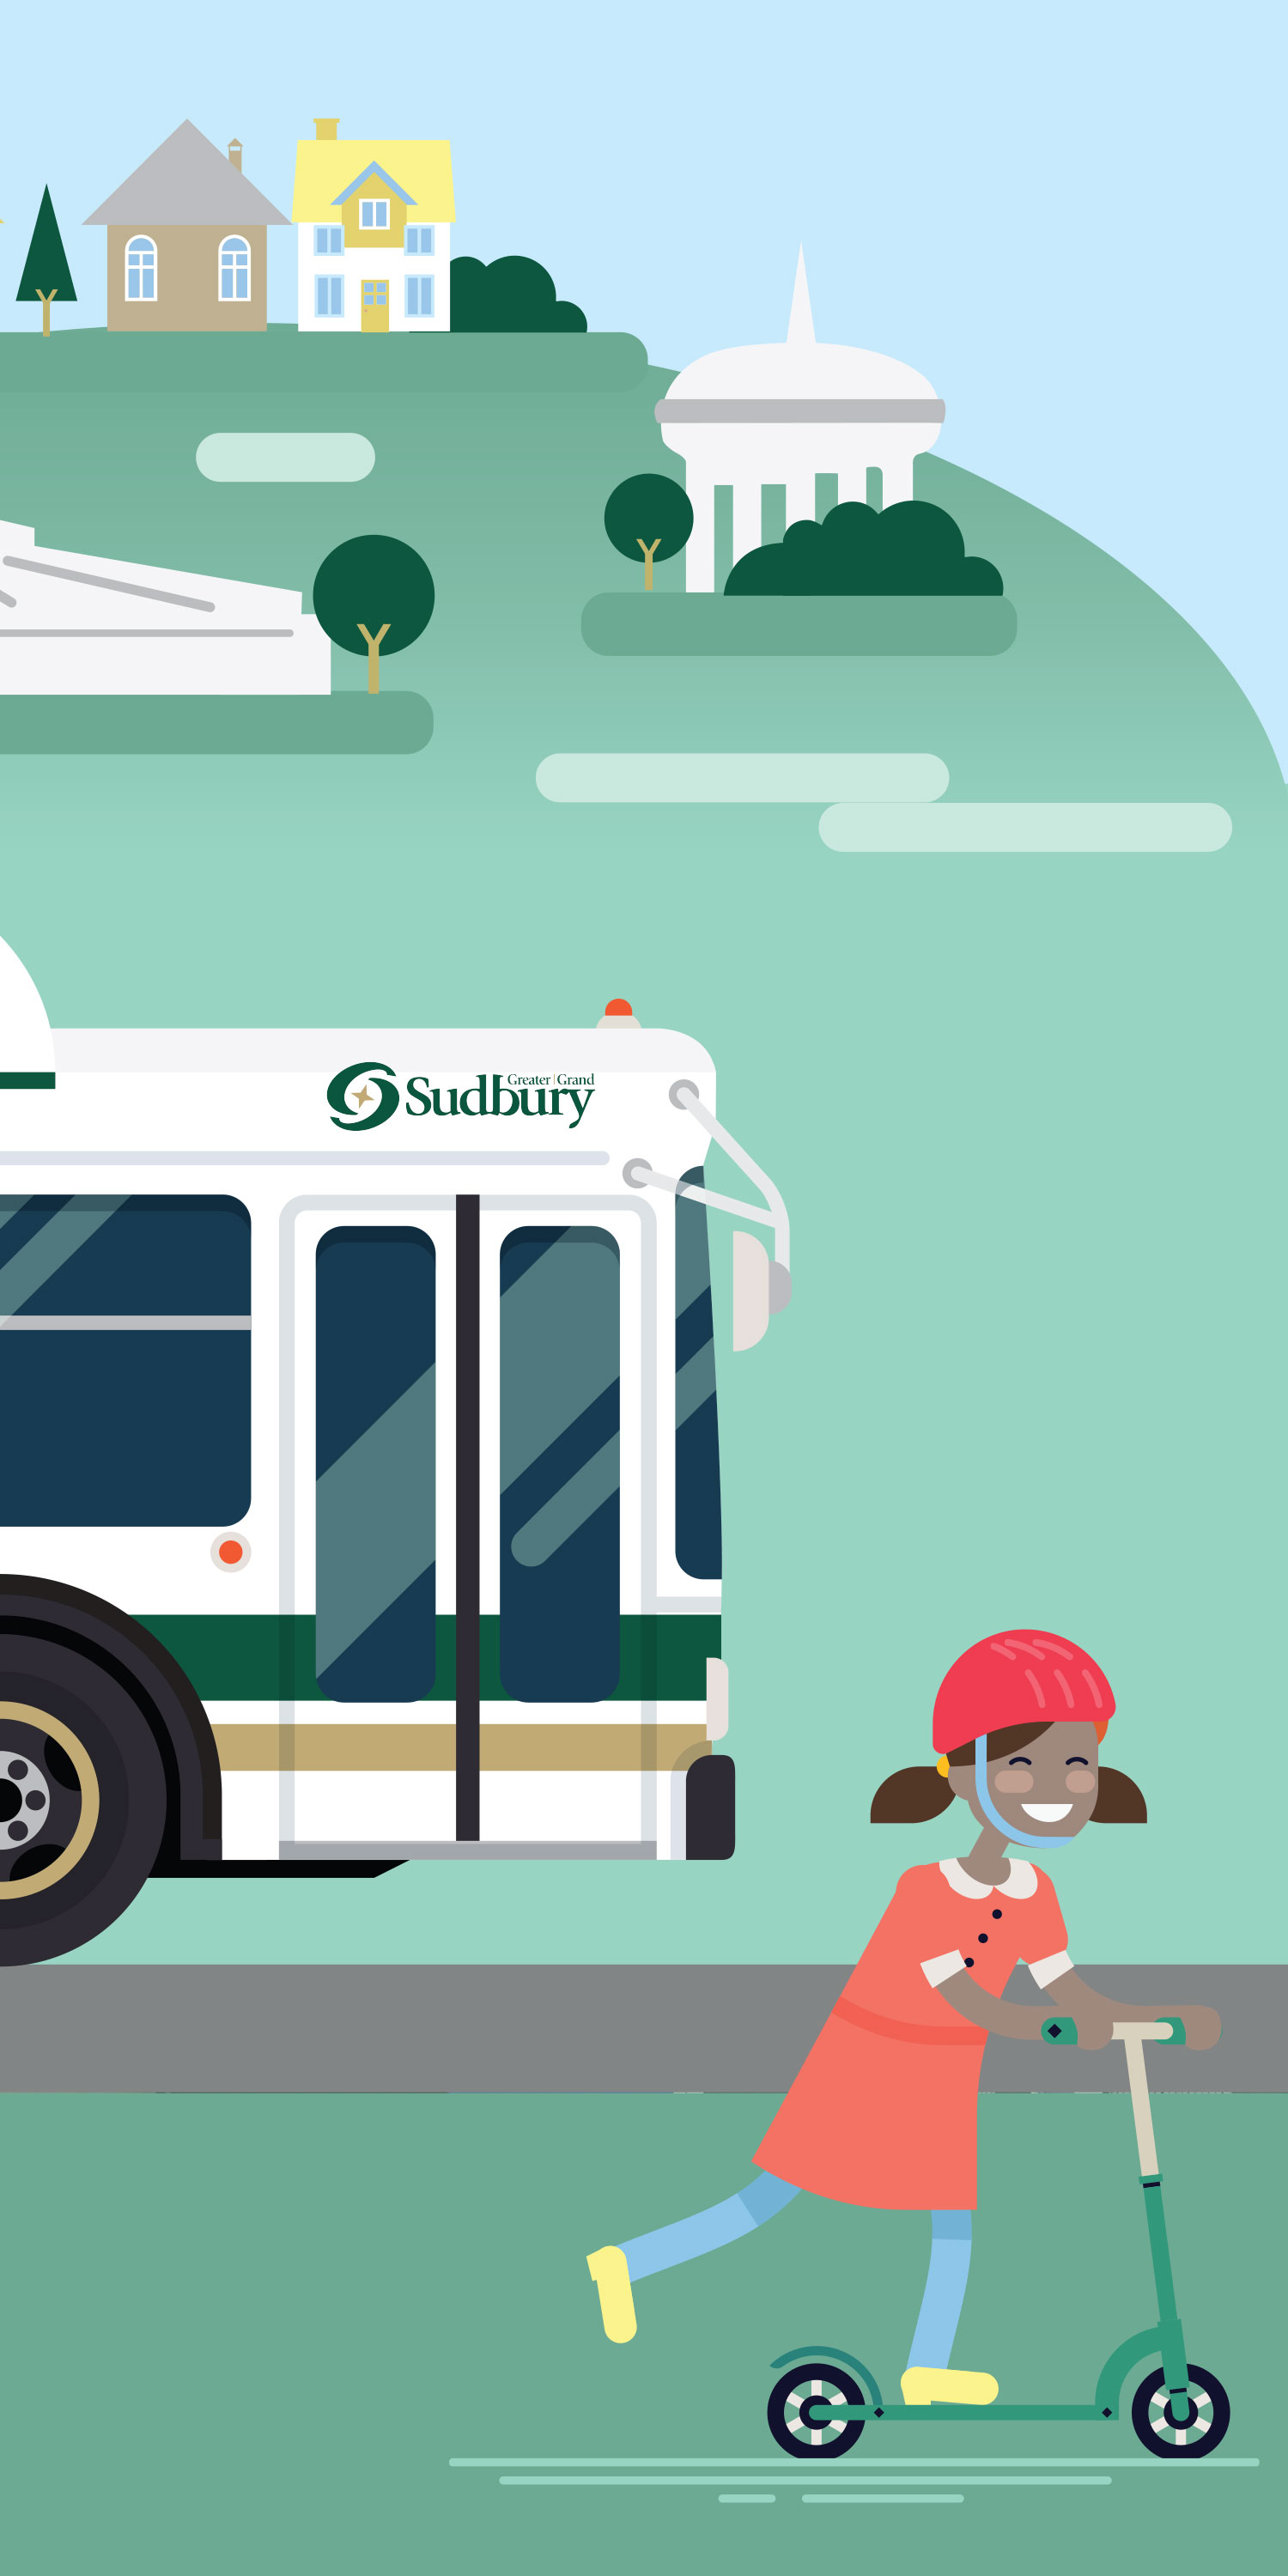 City of Greater Sudbury Transit